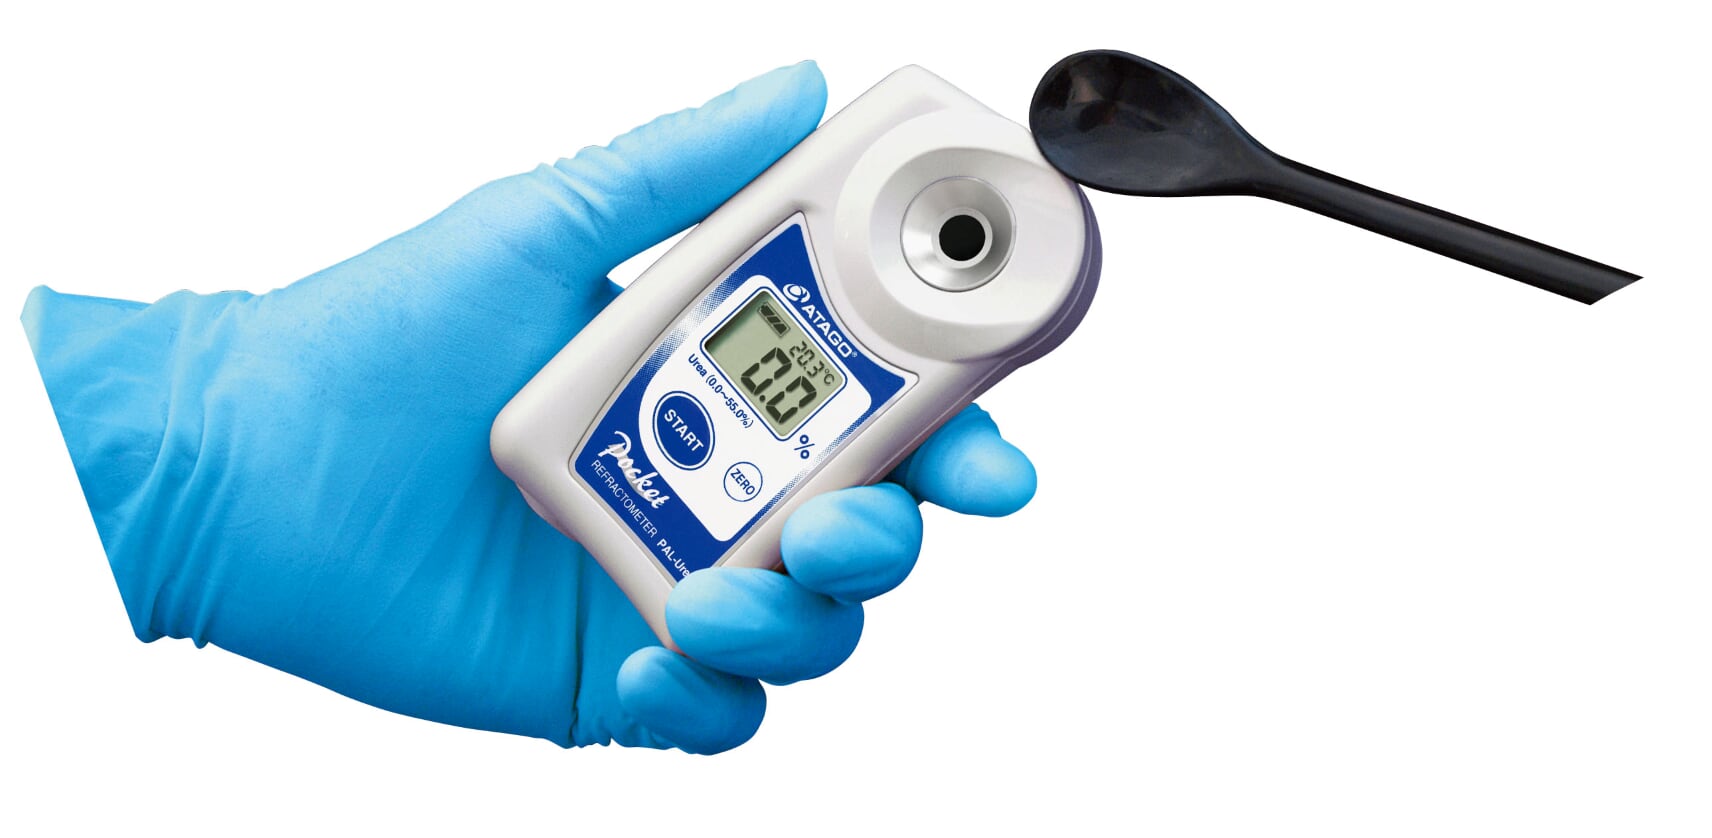 Atago 4518 Digital Pocket Urea Refractometer, PAL-Urea PAL Series, Urea : 0.0 to 55.0 % Measurement Range